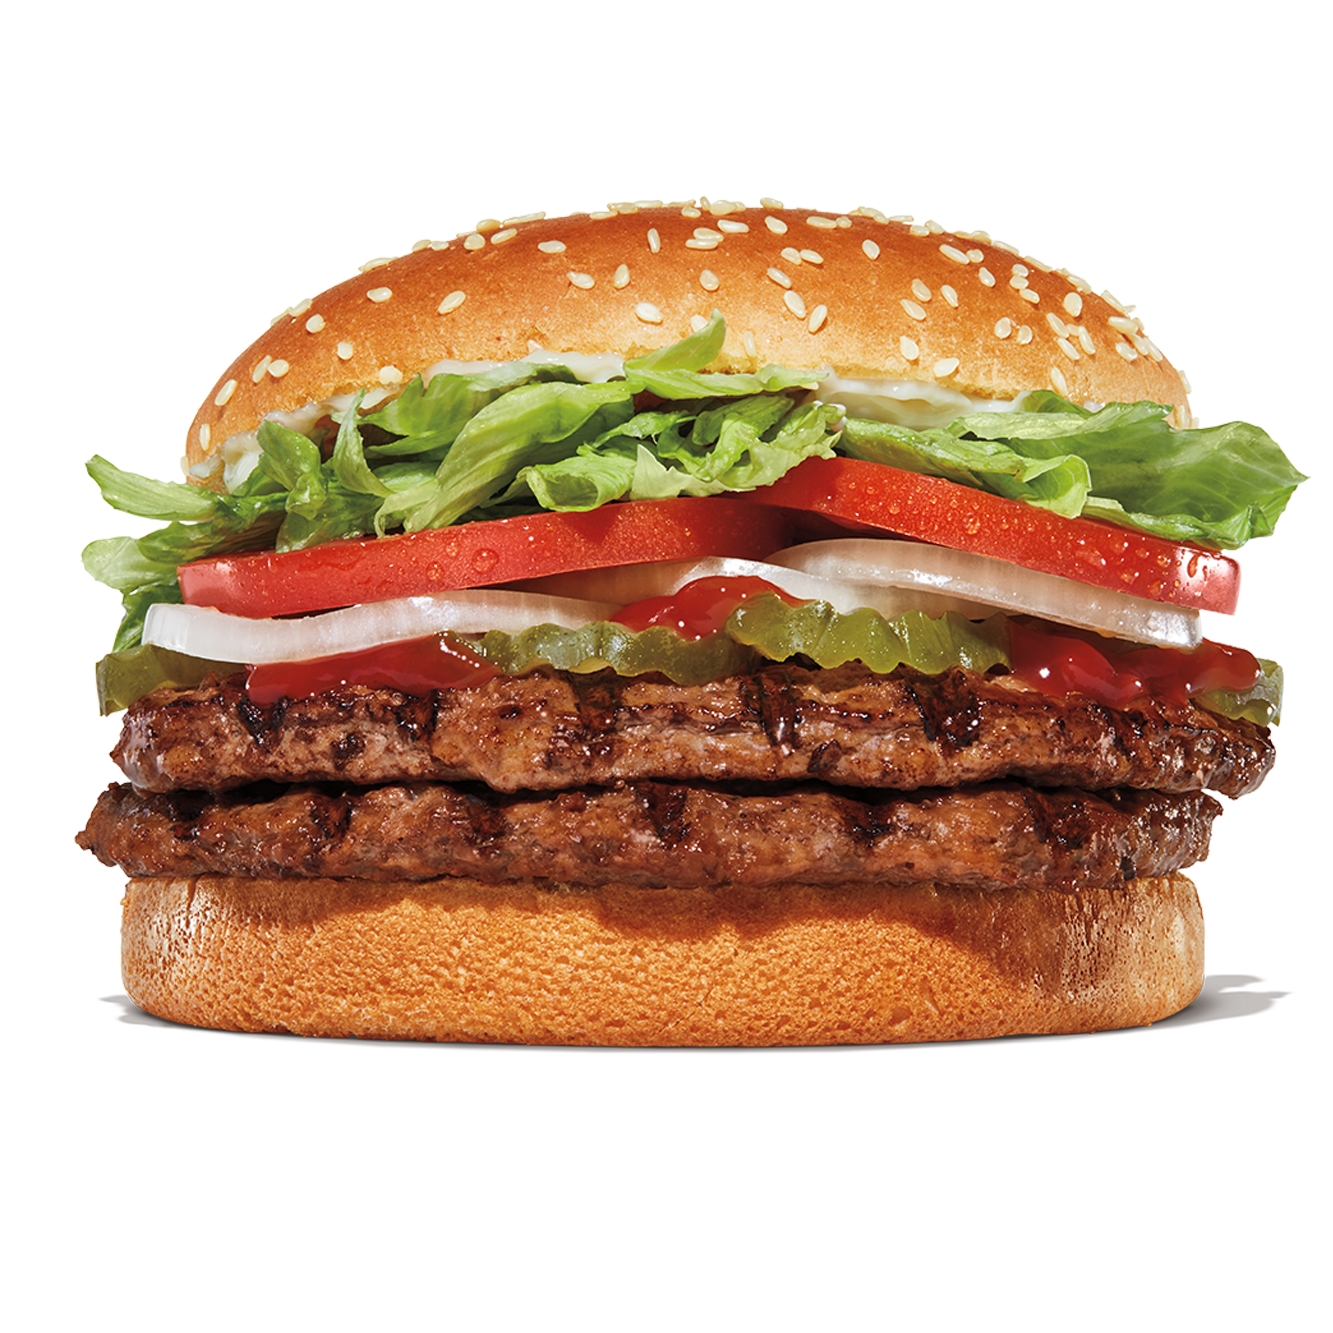 Burger King Chicago (872)264-8270